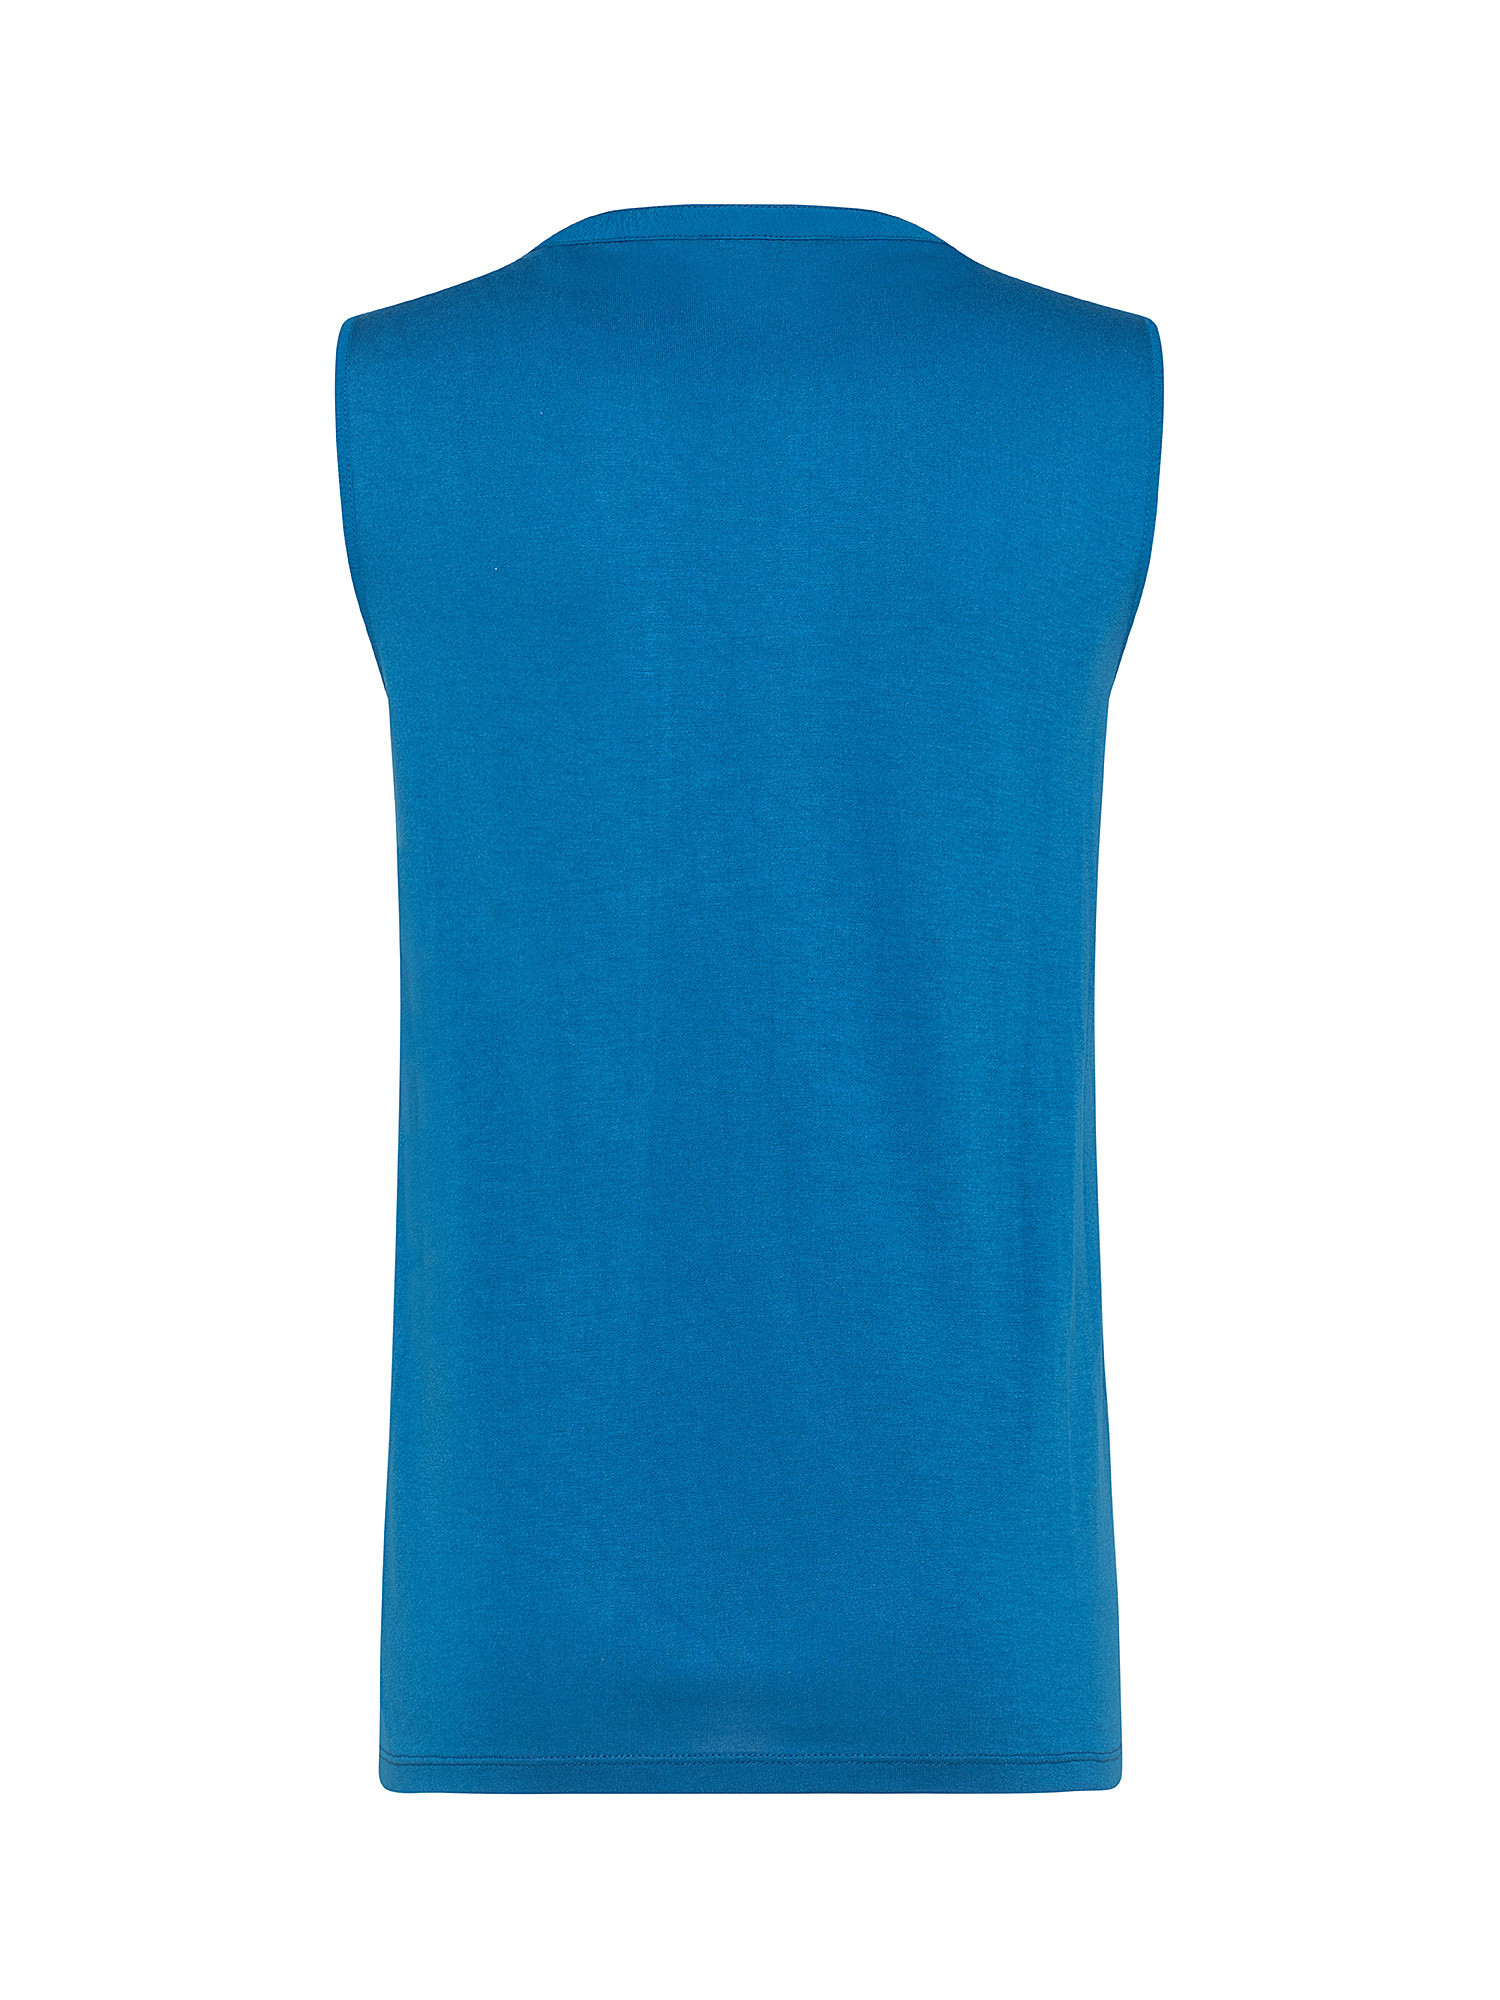 Morbida blusa senza maniche, Azzurro, large image number 1